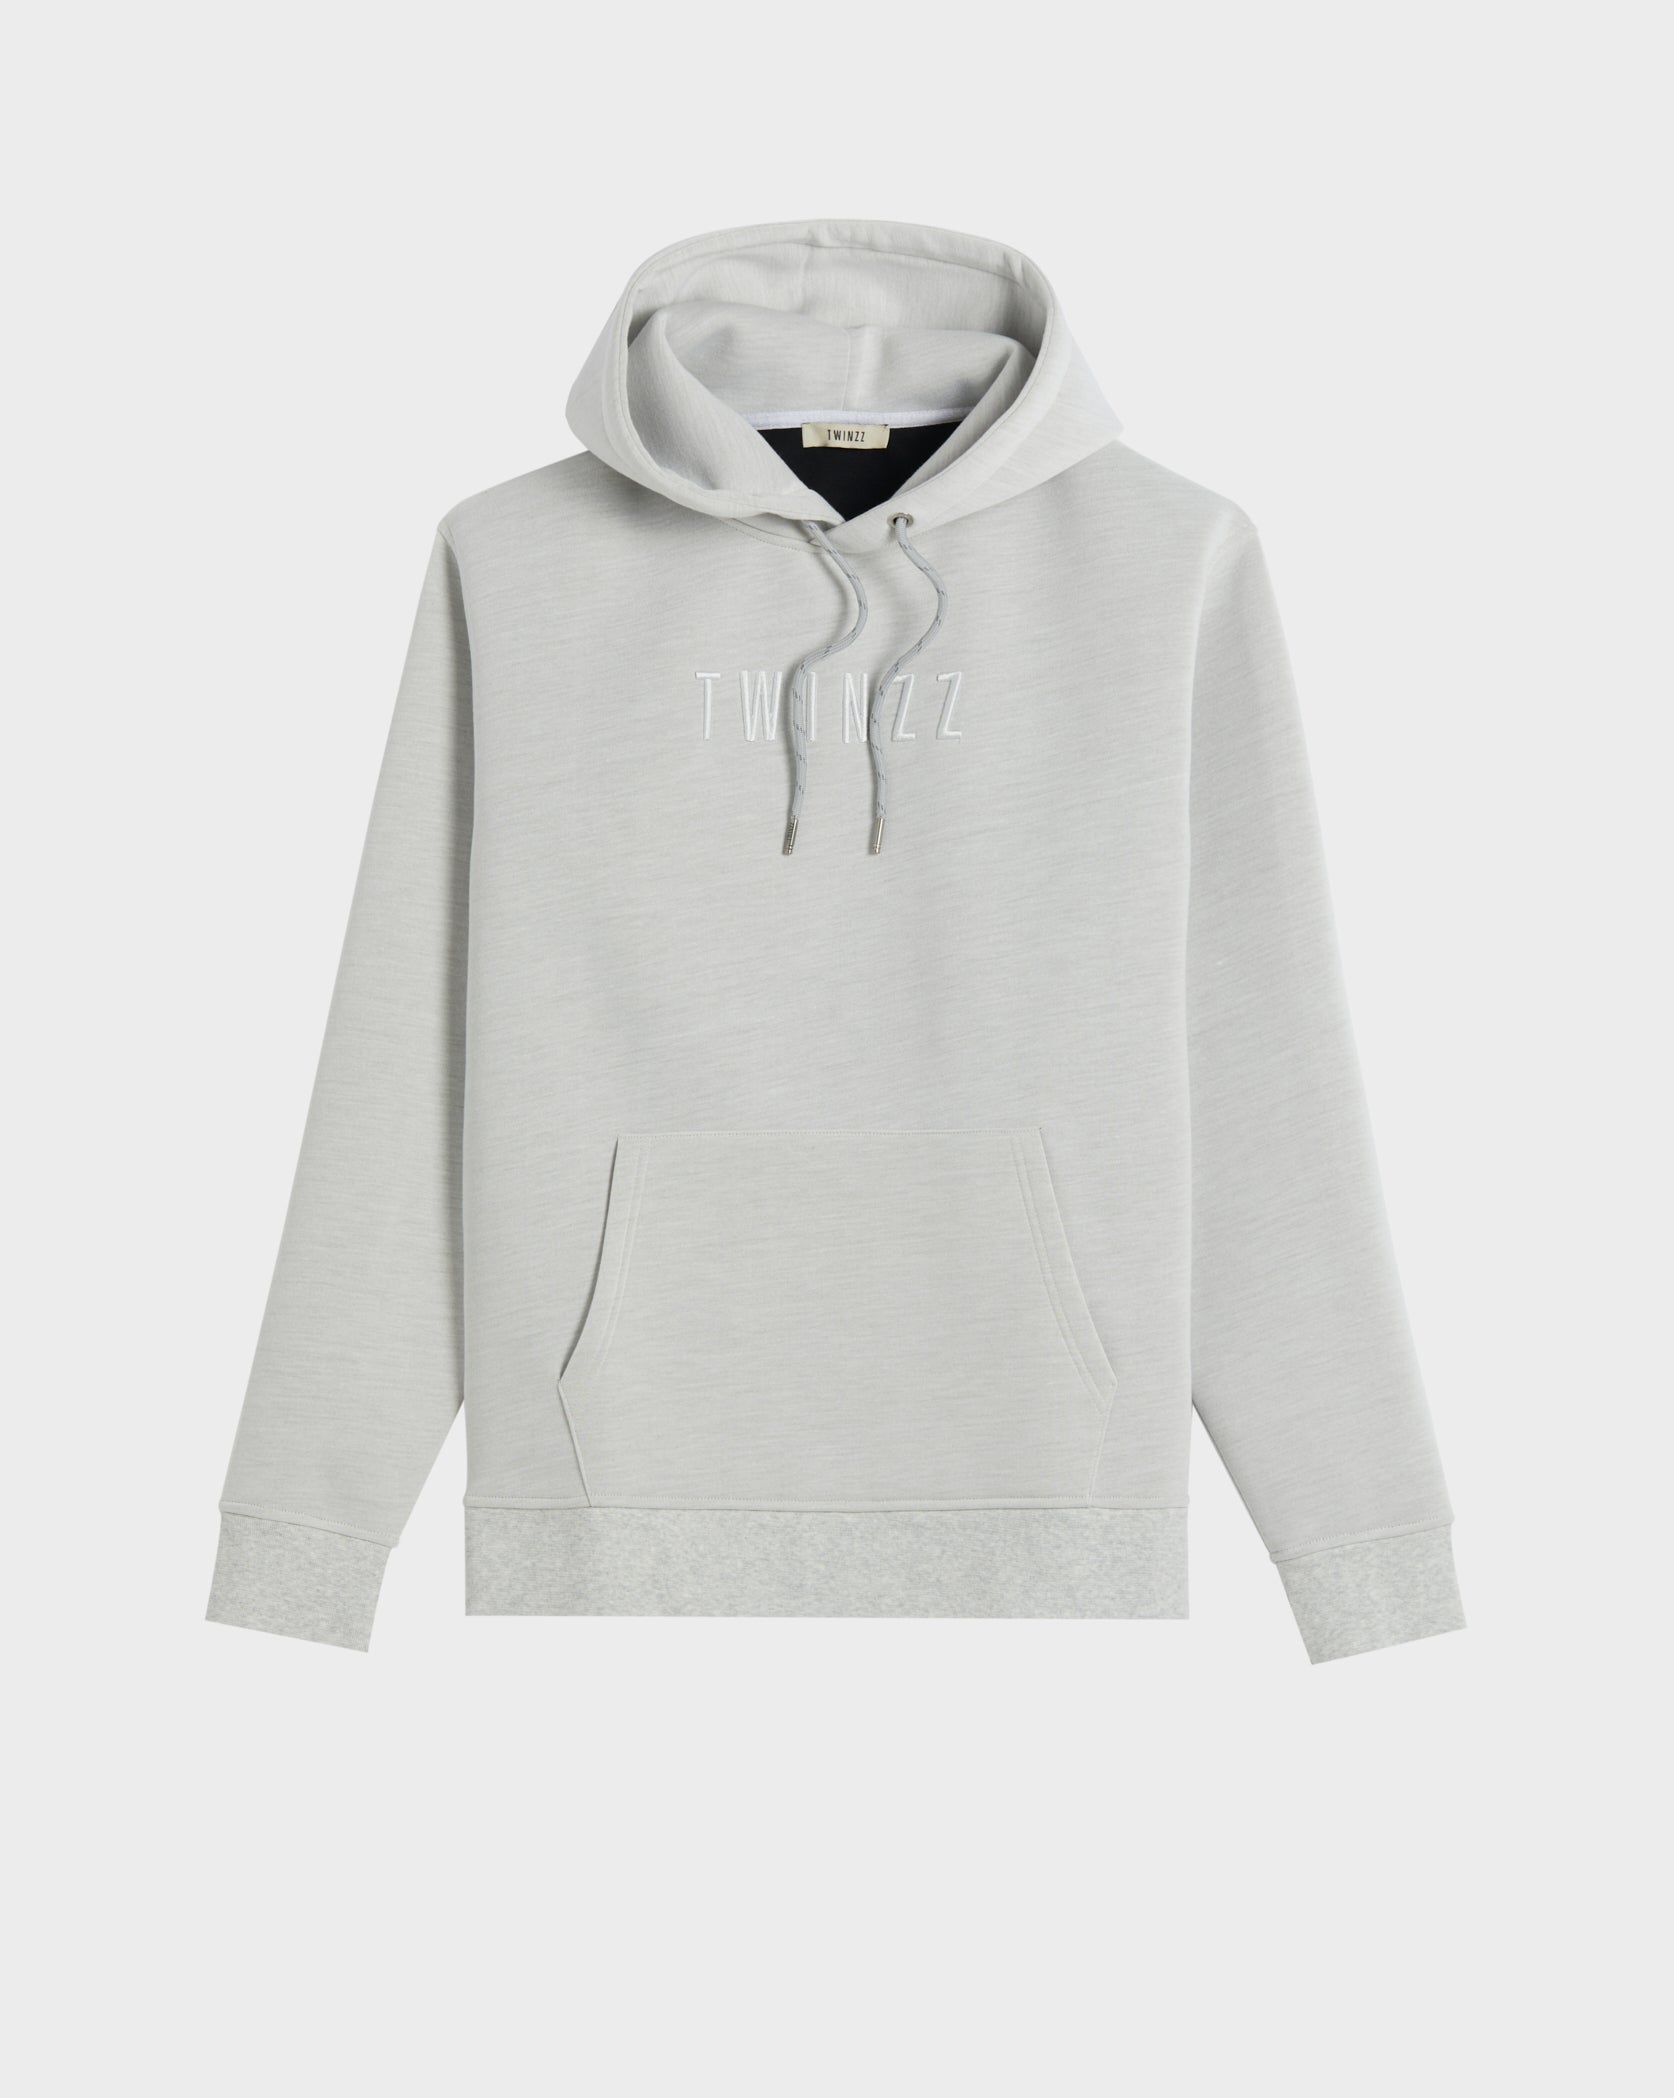 Twinzz grey hoodie